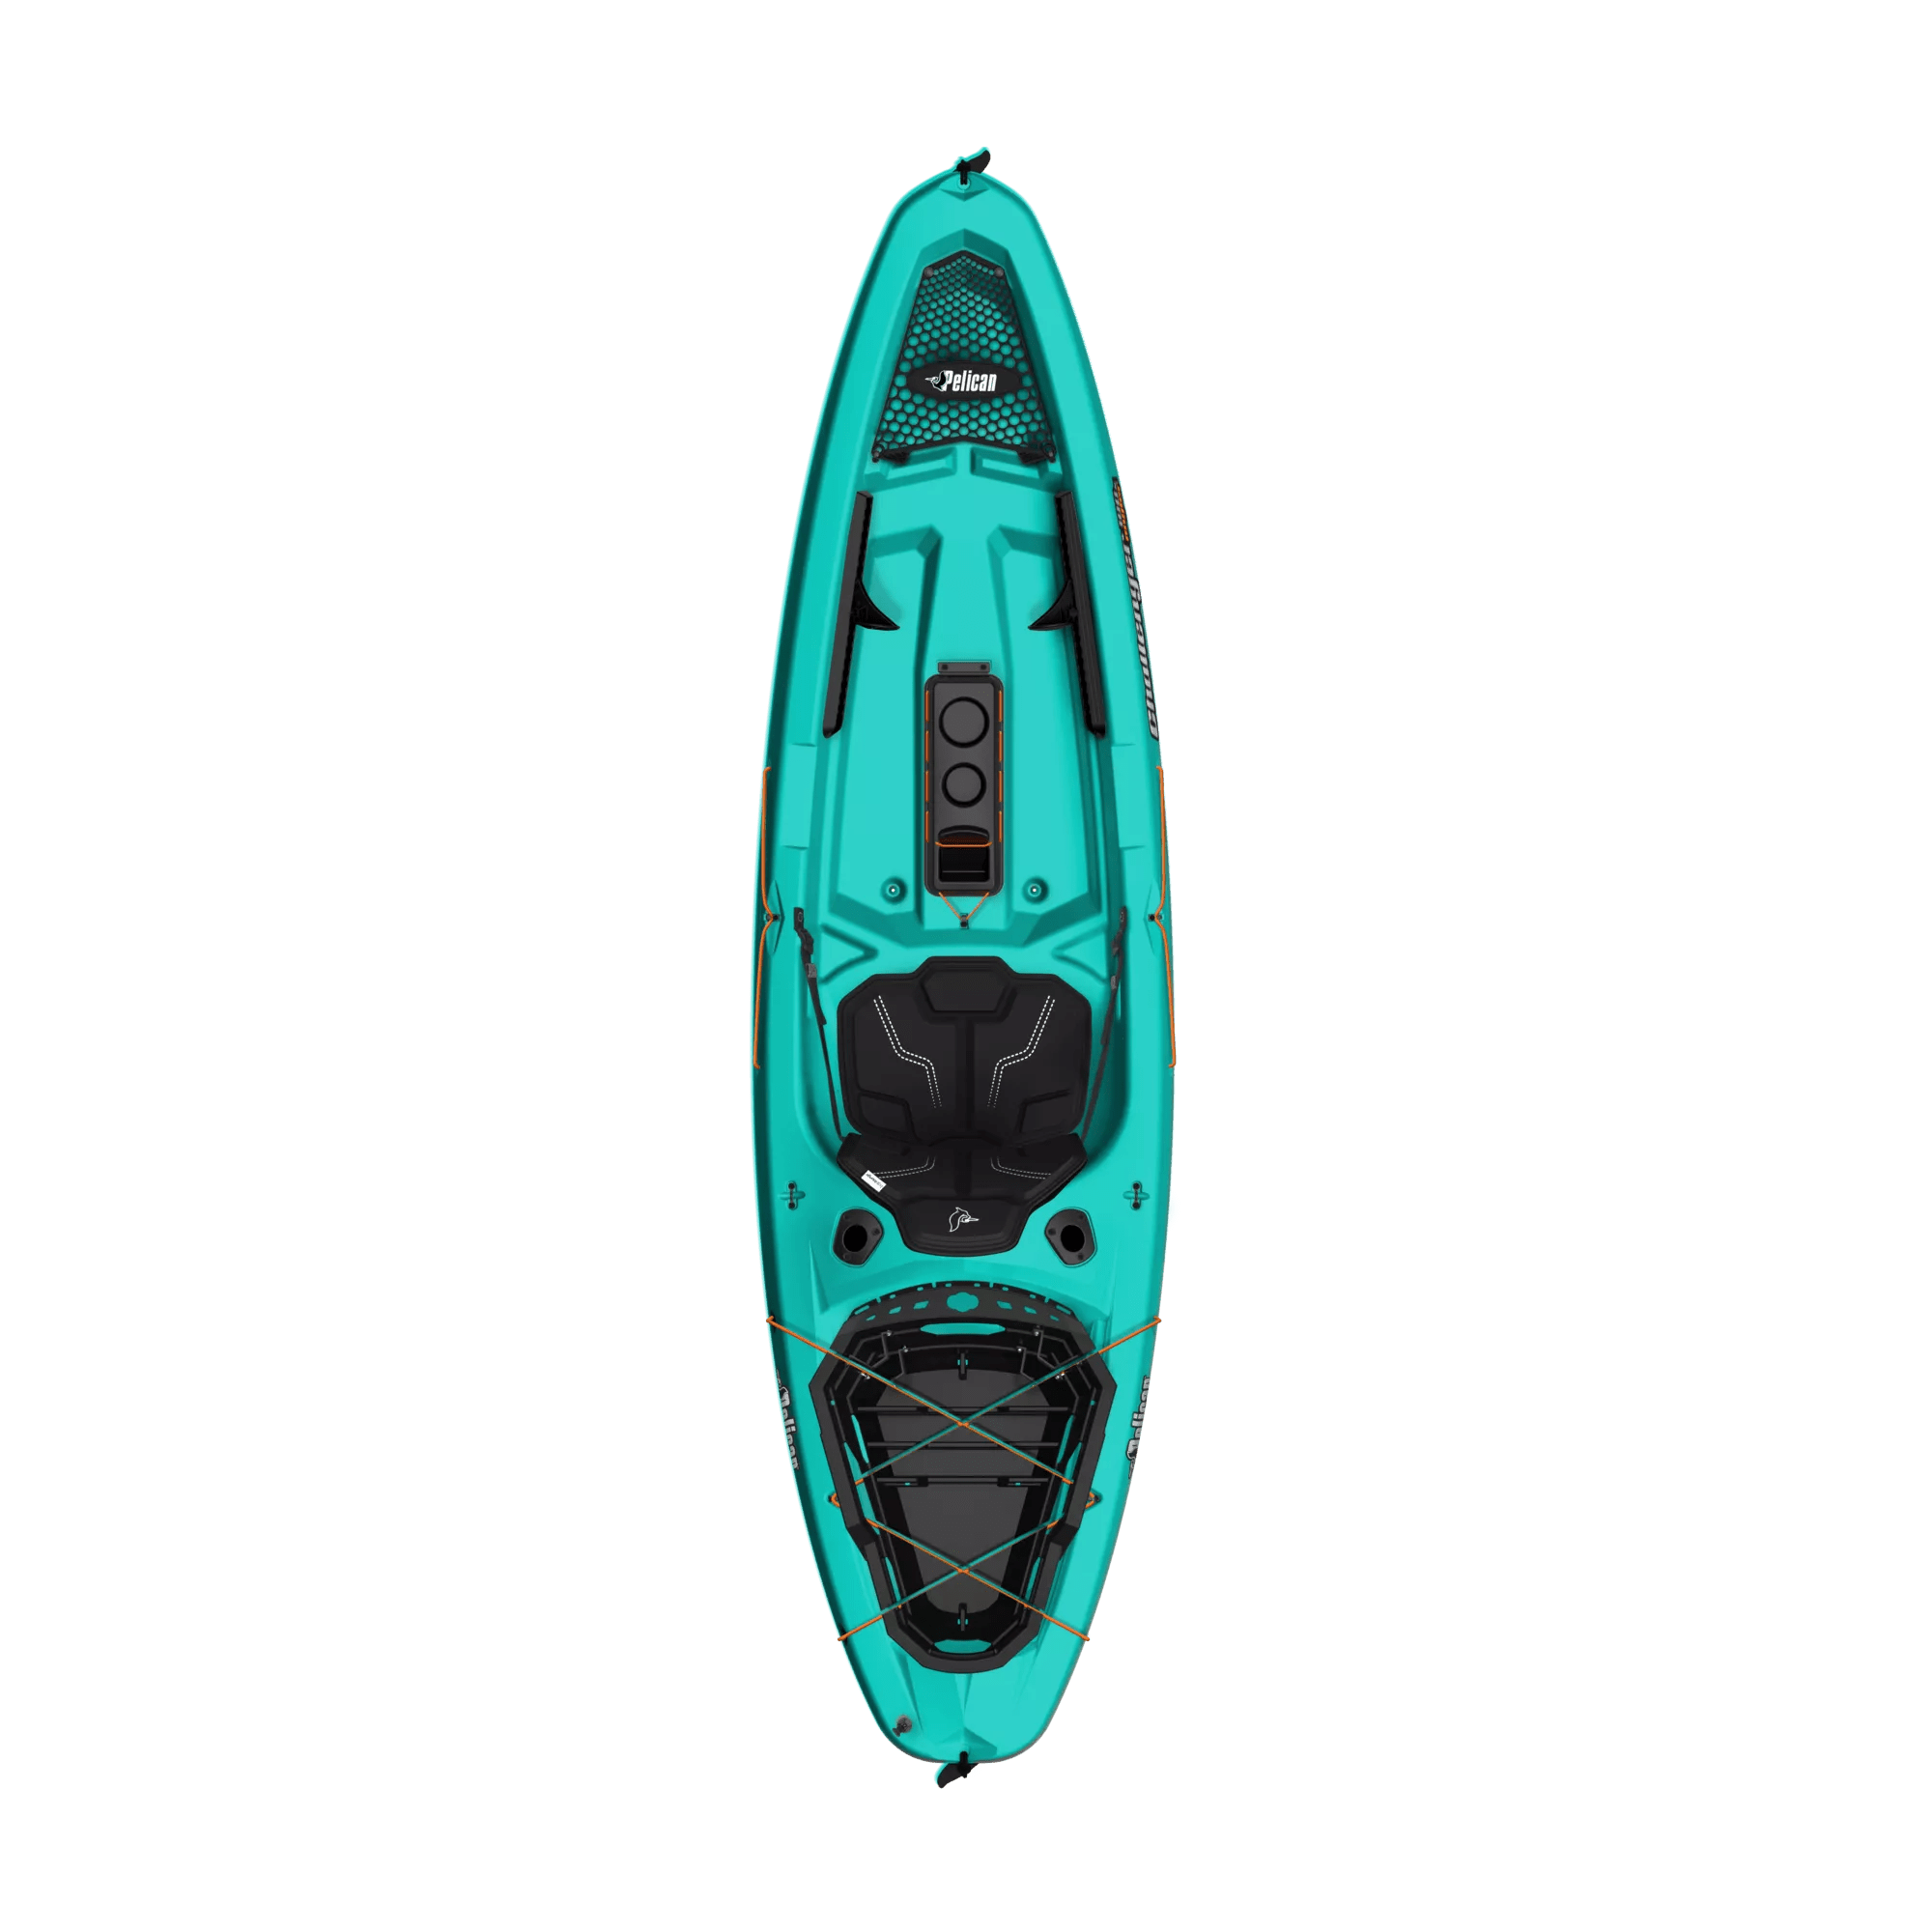 PELICAN - ChallengerSentinel 100X Angler Fishing Kayak - Aqua - MBA10P104 - TOP